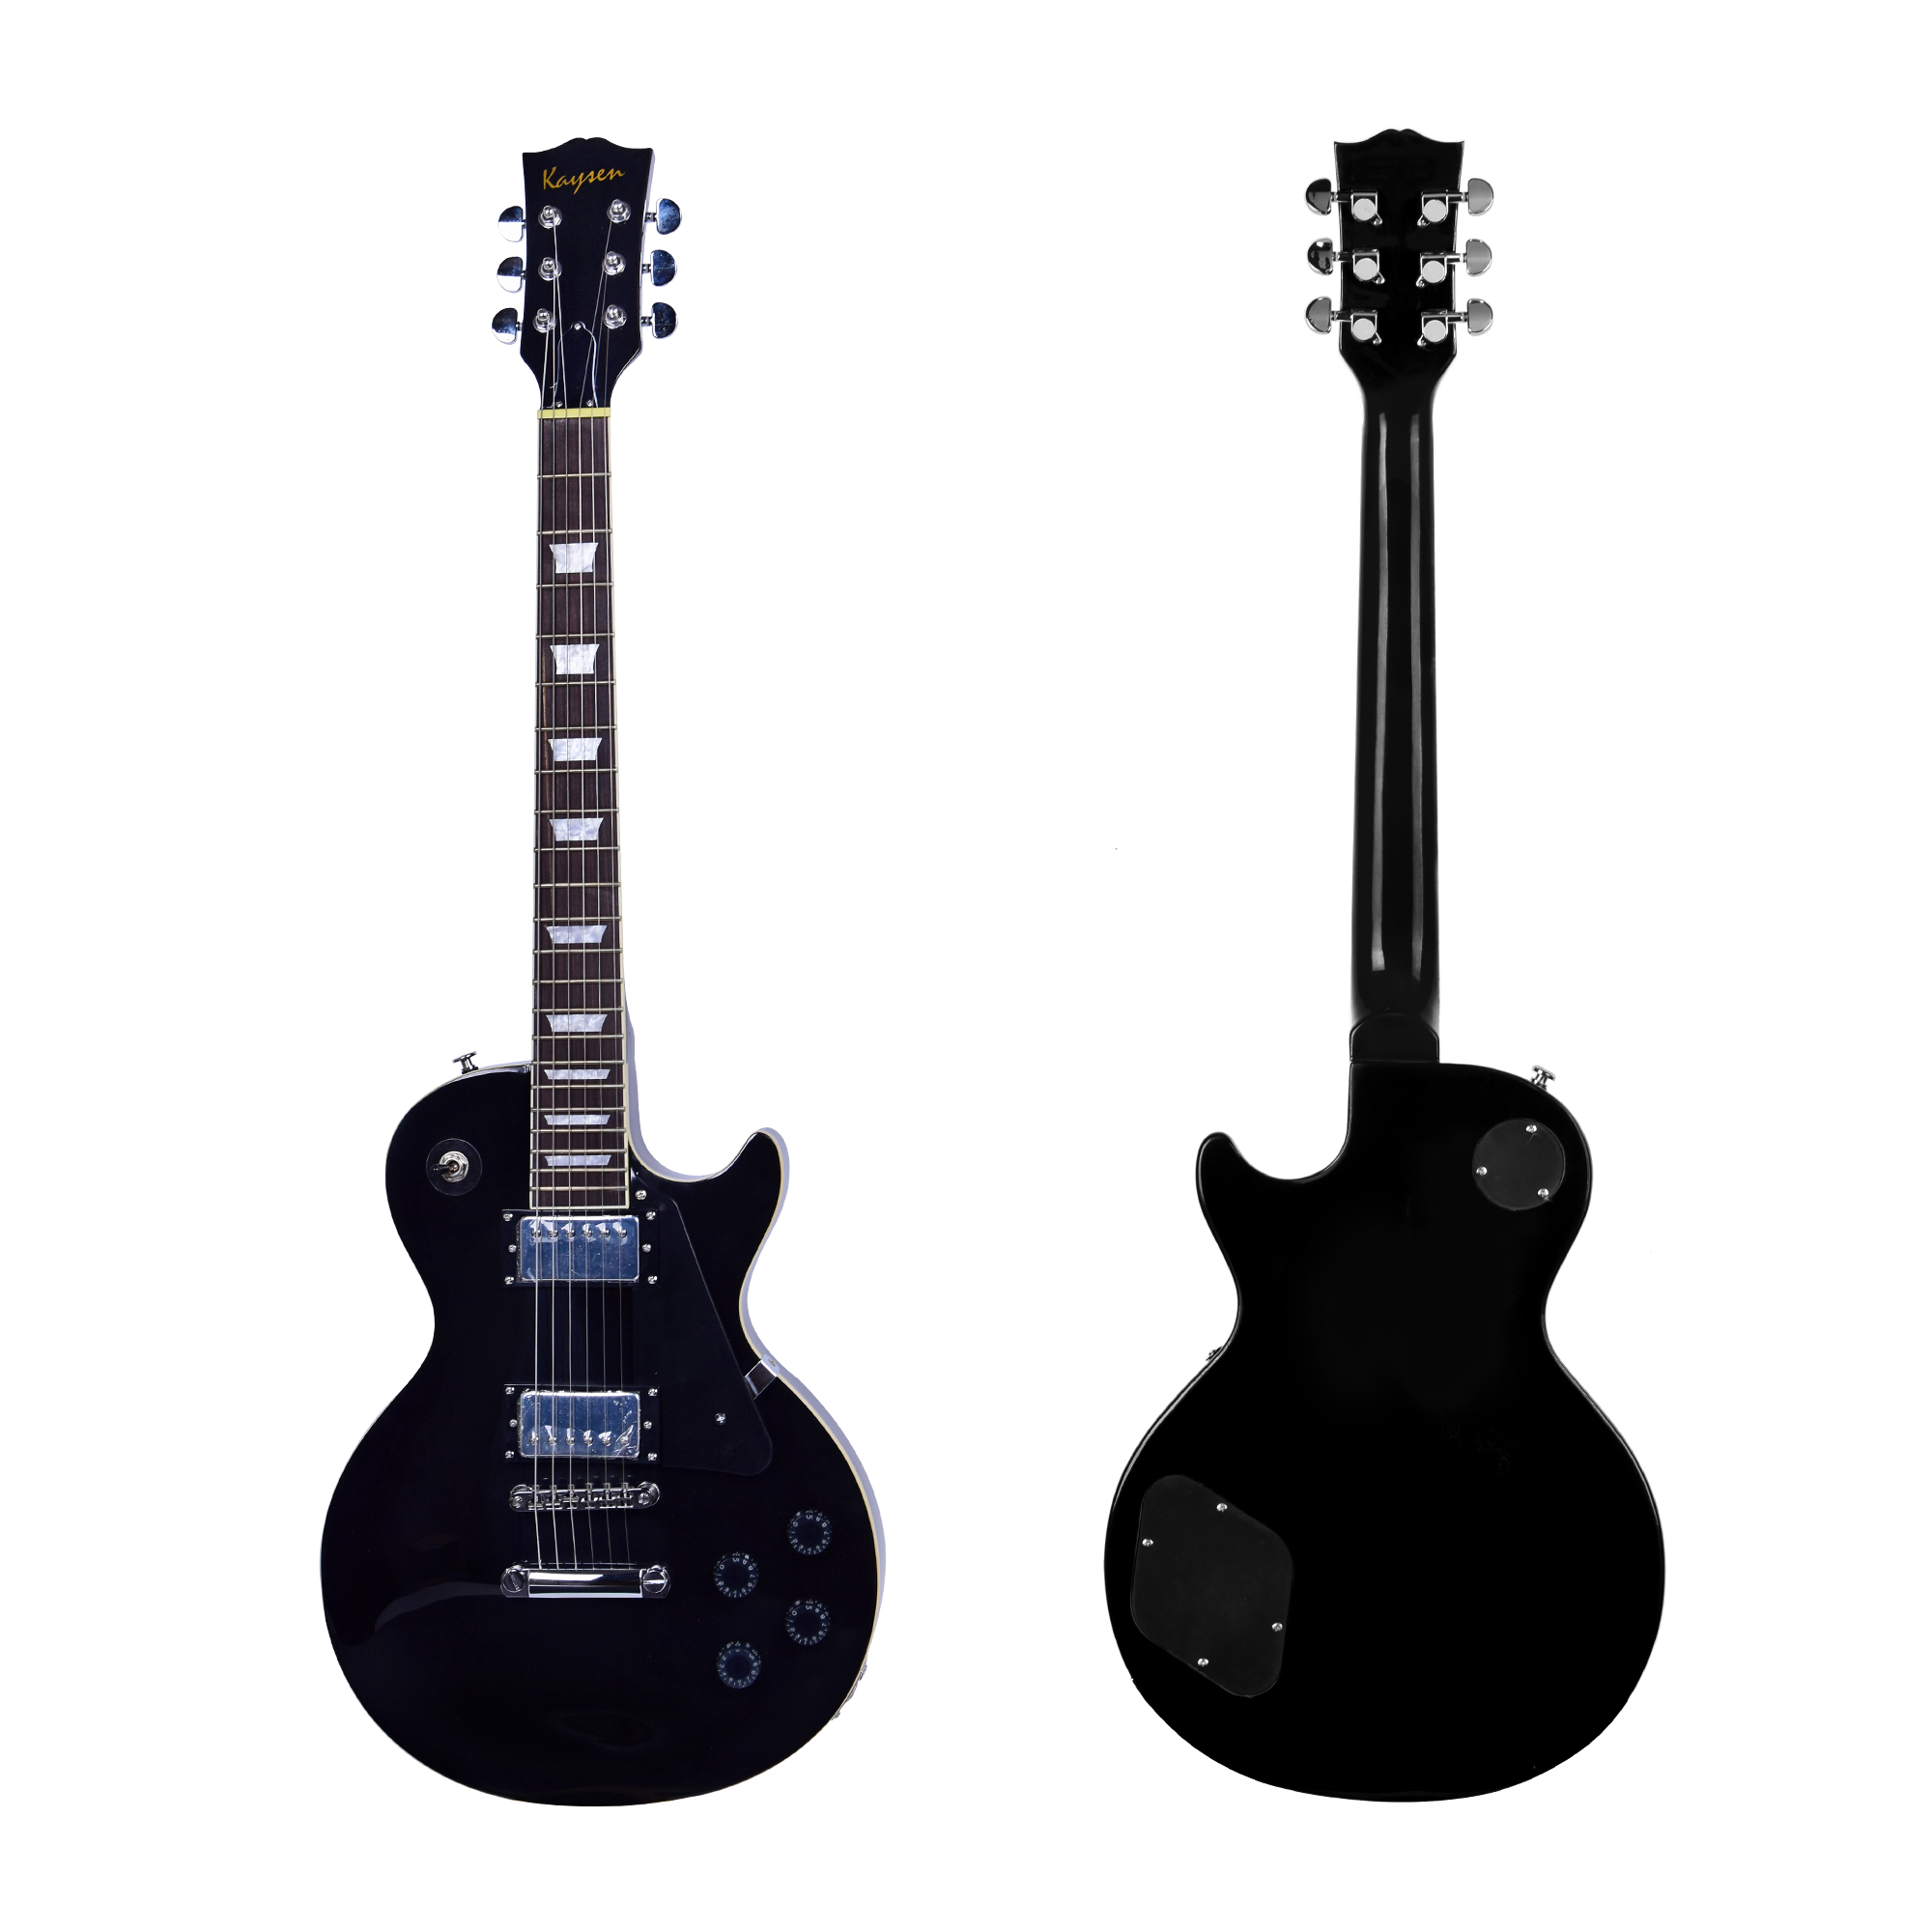 K-EG9 black electric guitar